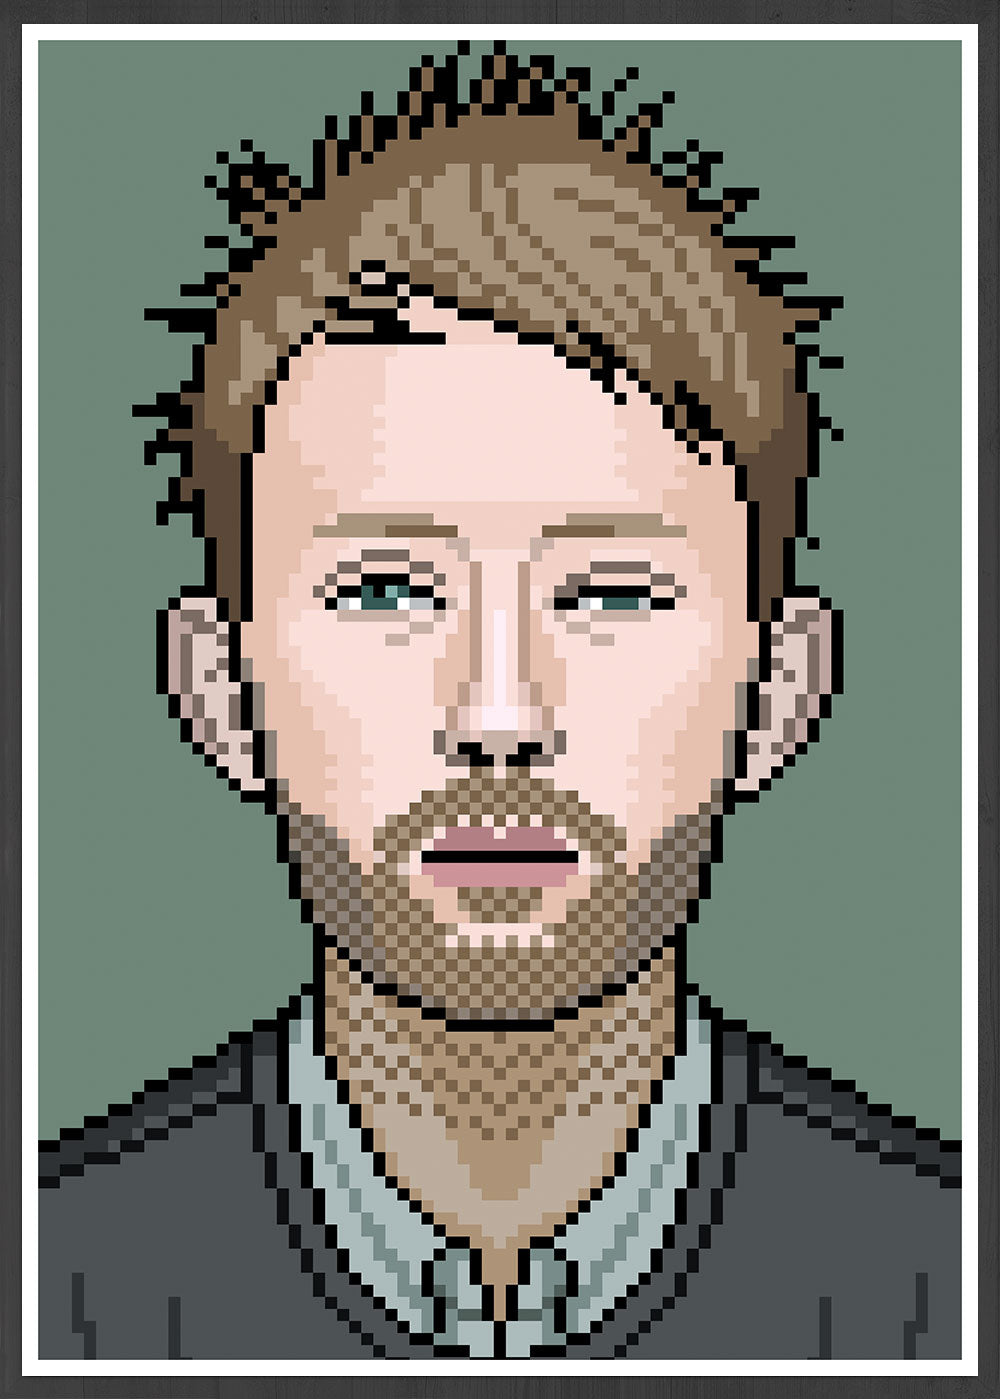 Thom Radiohead Art illustration in frame